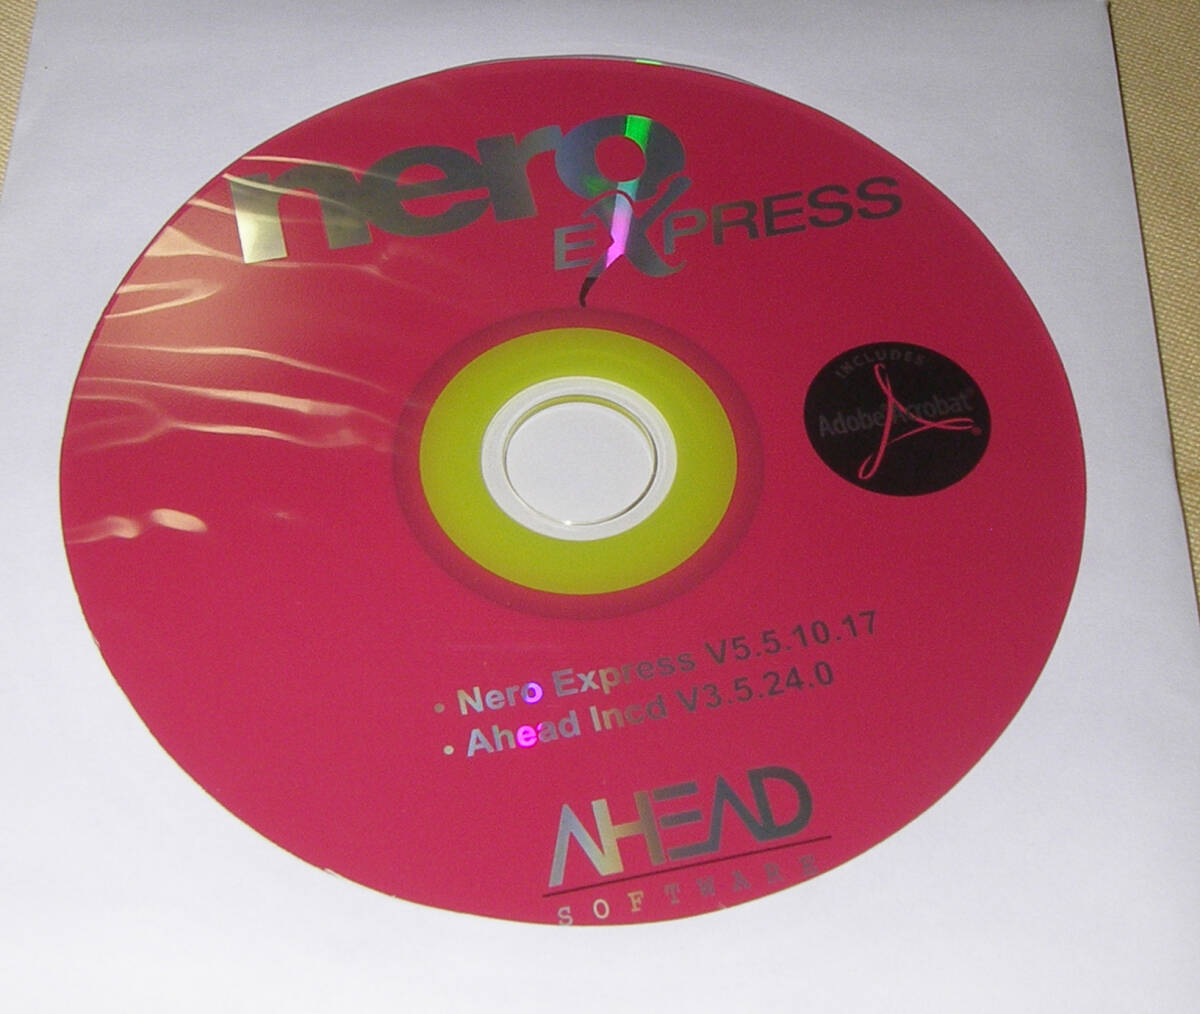 ★AHEAD NERO EXPRESS 5 CD for Windows★新品★_画像3